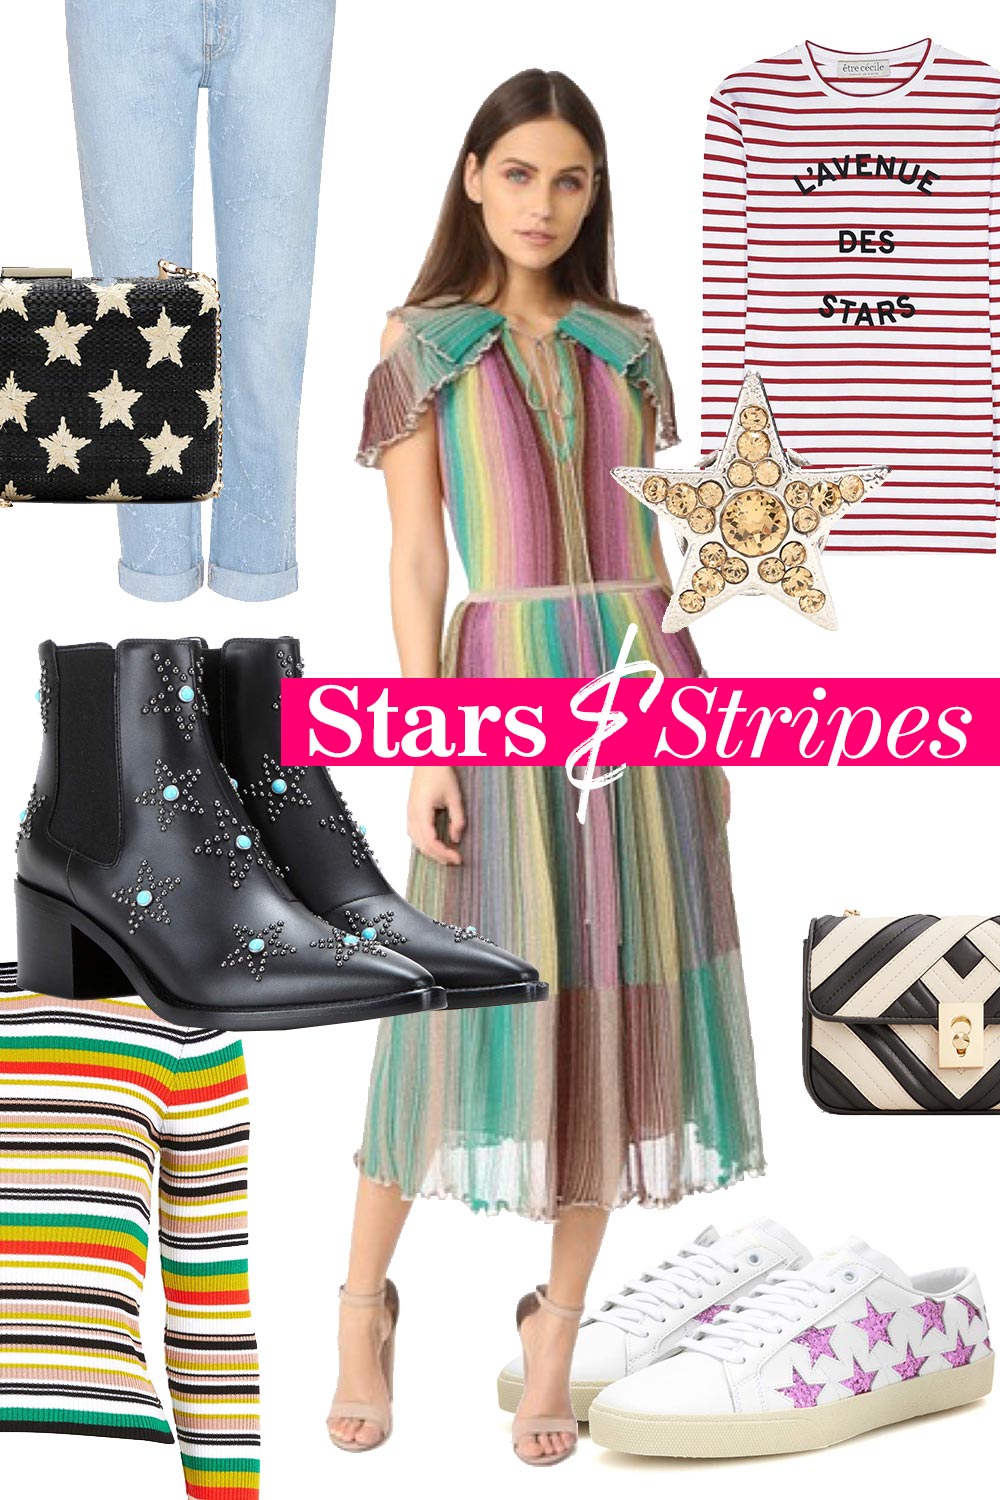 Stars & Stripes Fashion Challenge Blogger Parade, Modeblogger, Fashion Blog, Style Blog, www.whoismocca.com